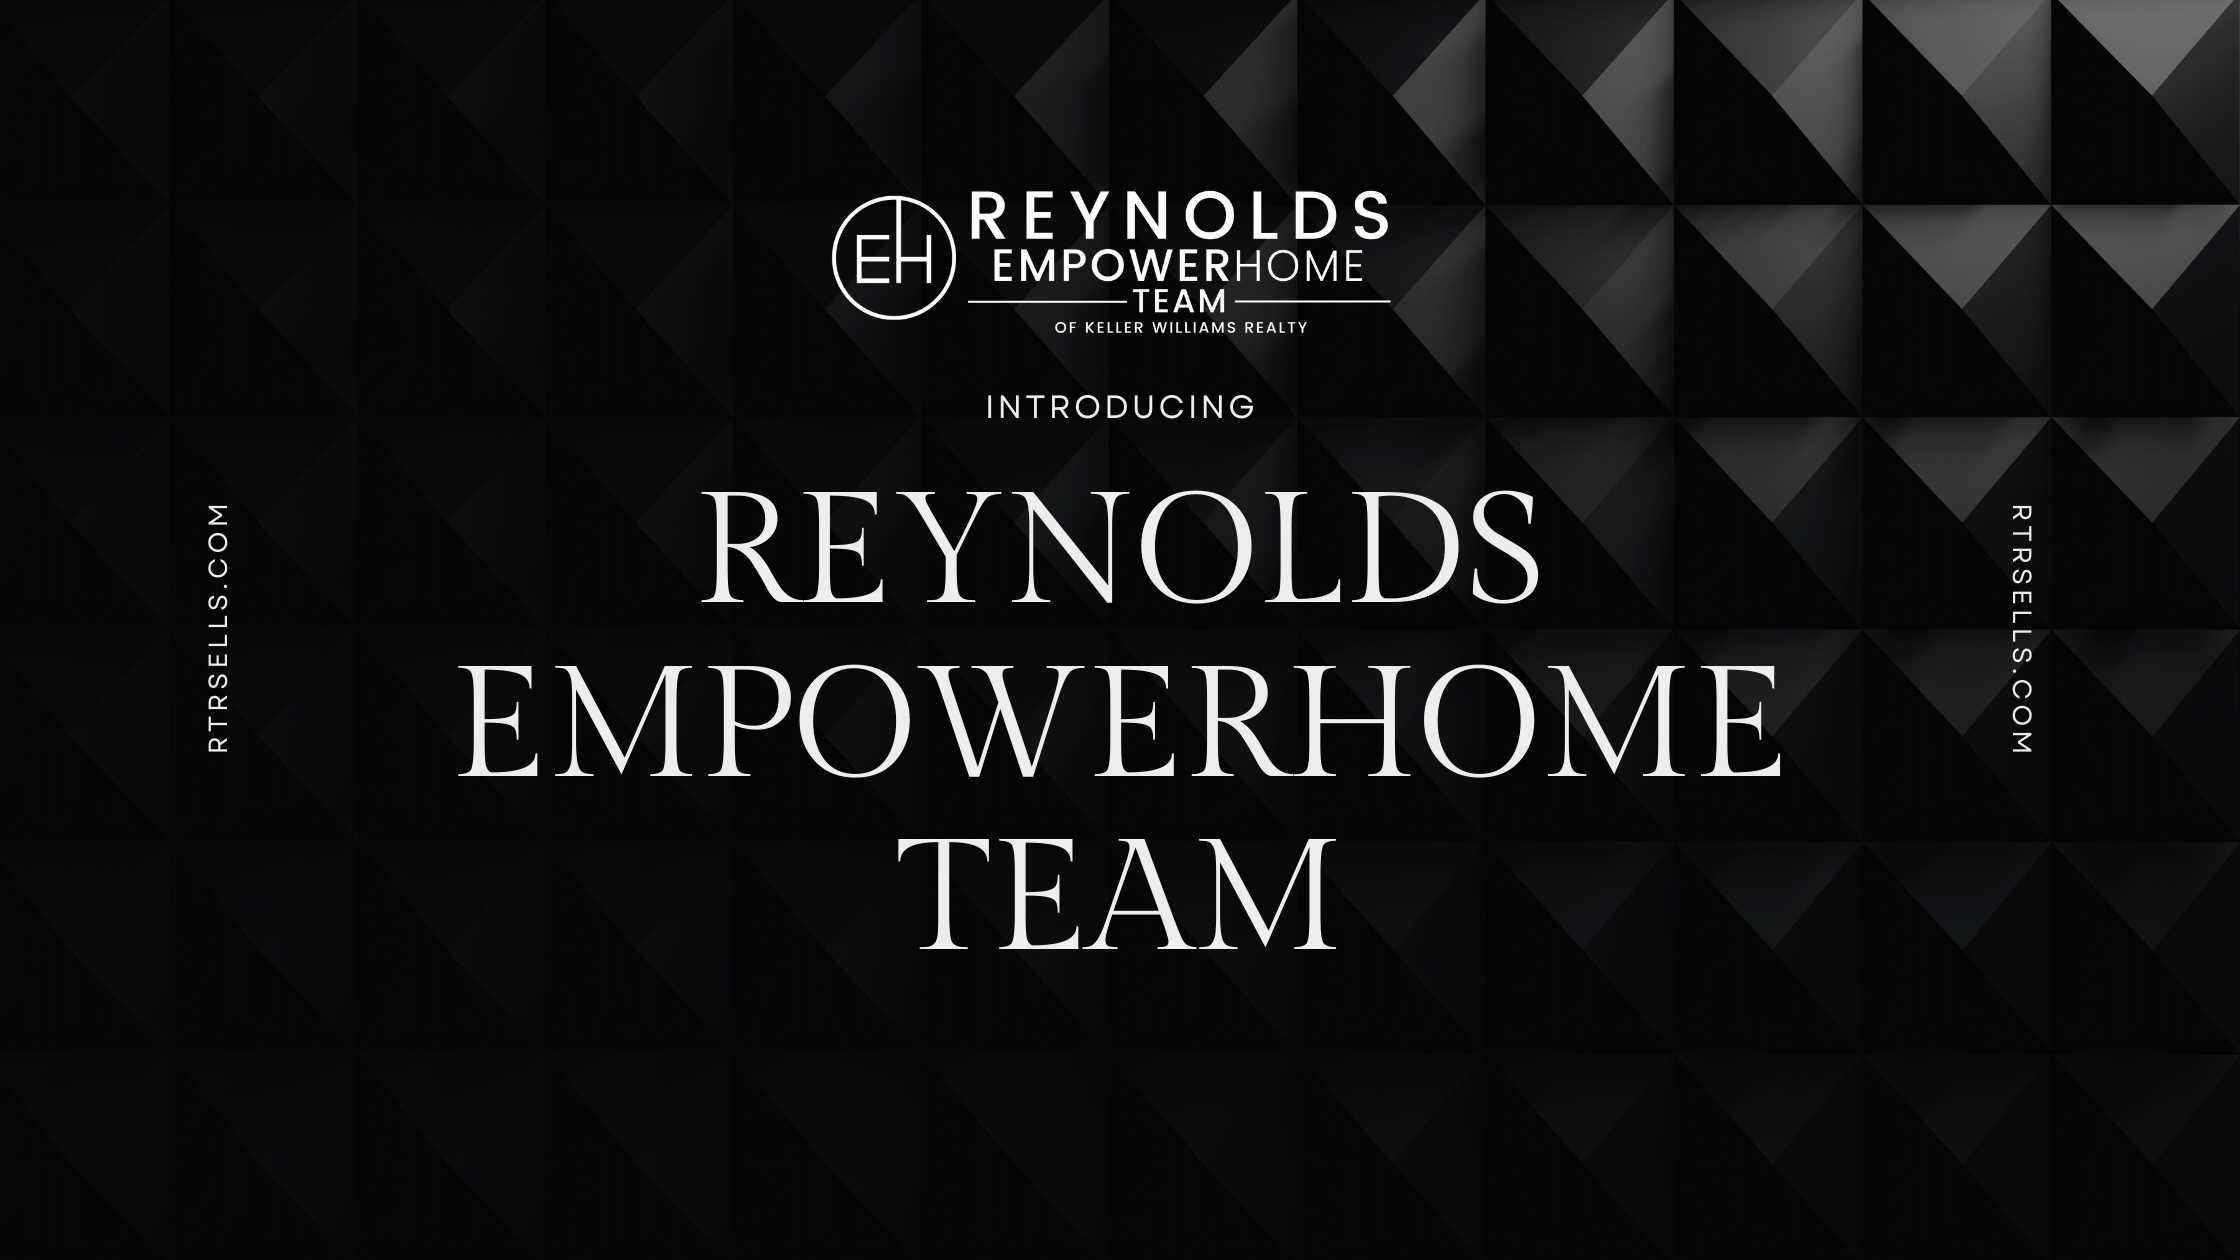 BIG News! The Reynolds Team is Rebranding to Reynolds EmpowerHome Team!